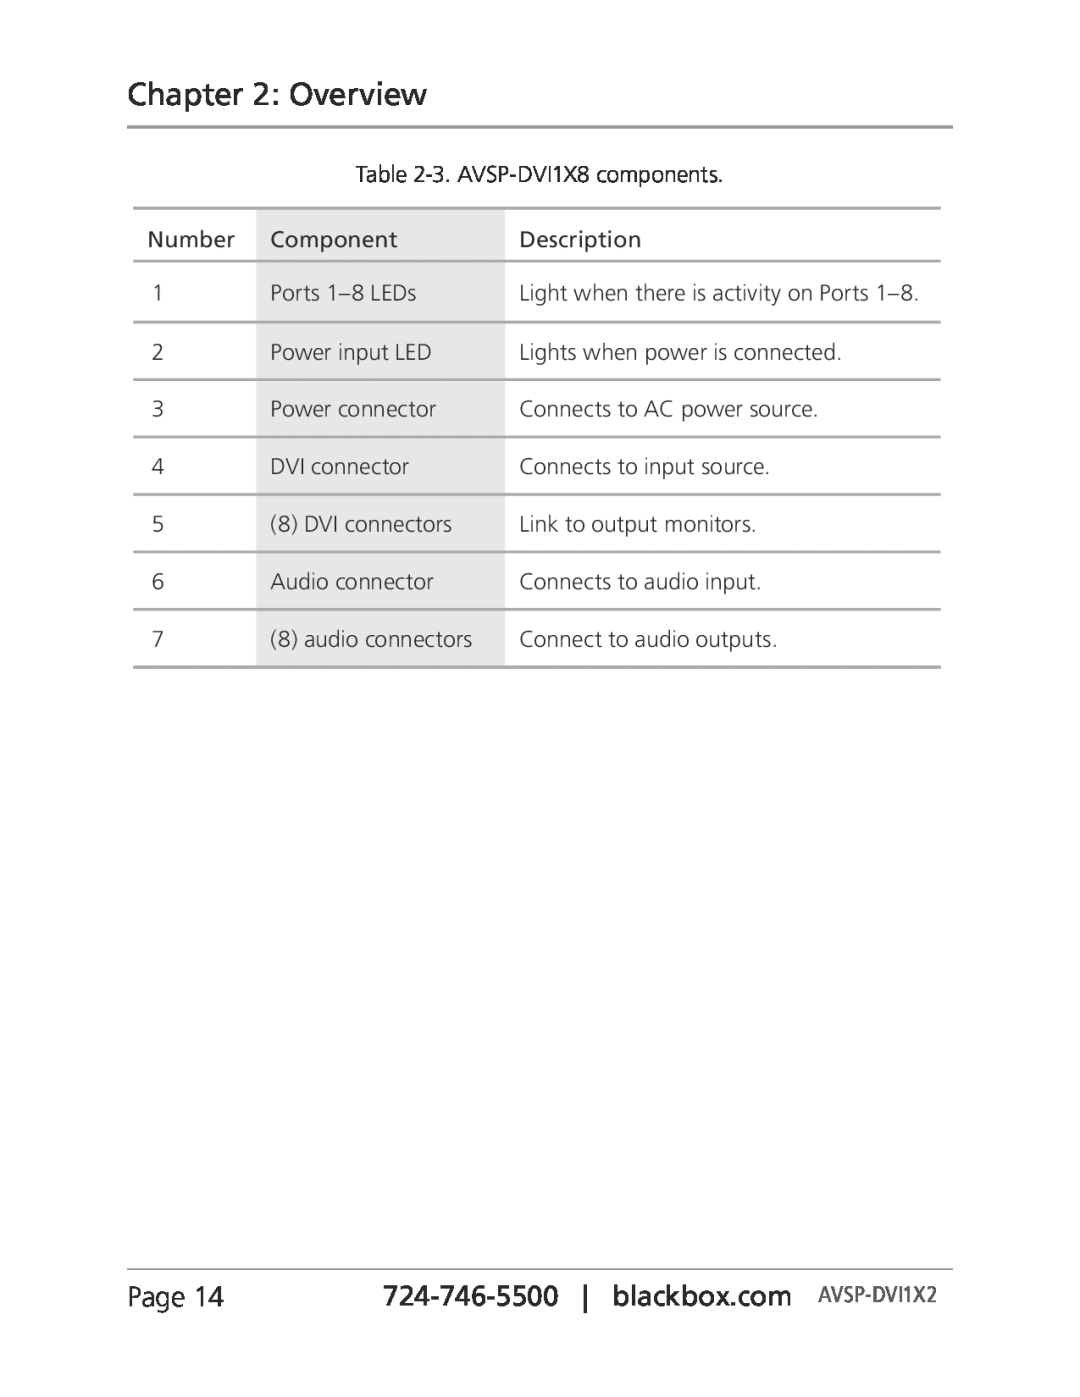 Black Box AVSP-DVI1X4, Black Box manual Overview, Page, 724-746-5500| blackbox.com AVSP-DVI1X2, 3. AVSP-DVI1X8components 